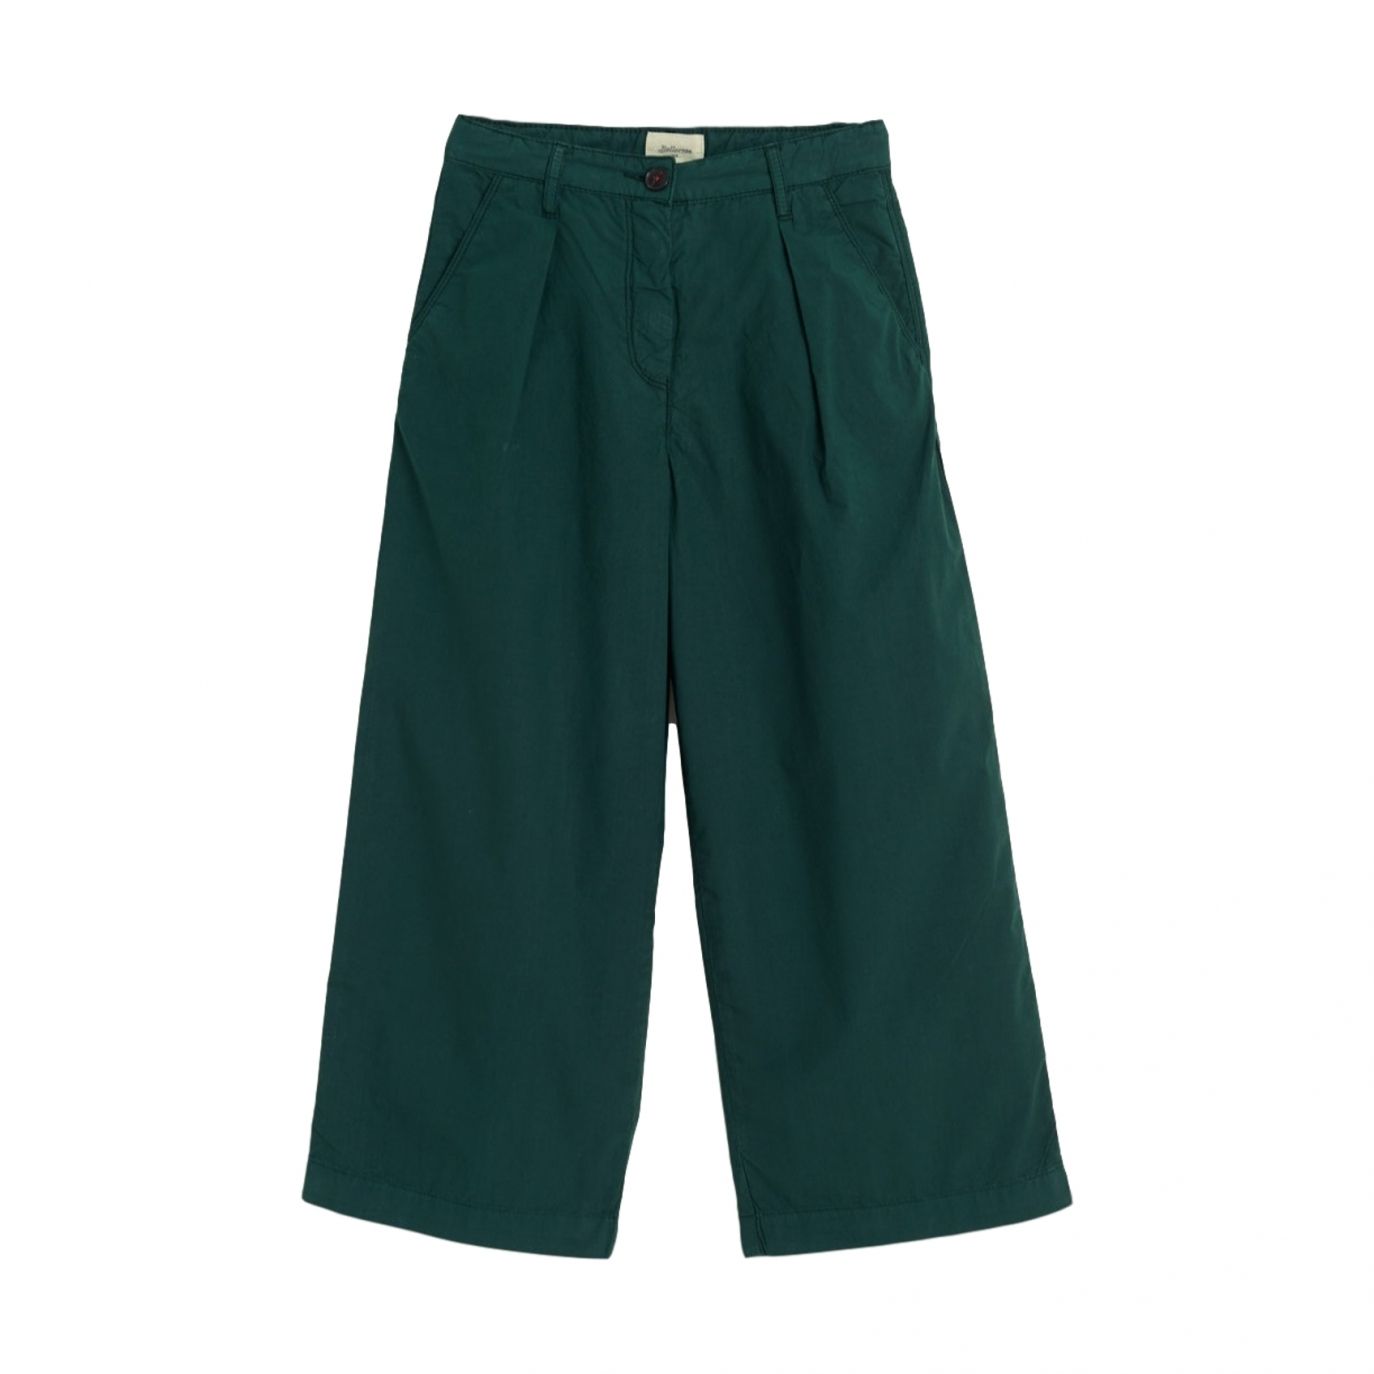 Bellerose - Papa201 Pants Green - Pants & leggings - BK201101 R0740 